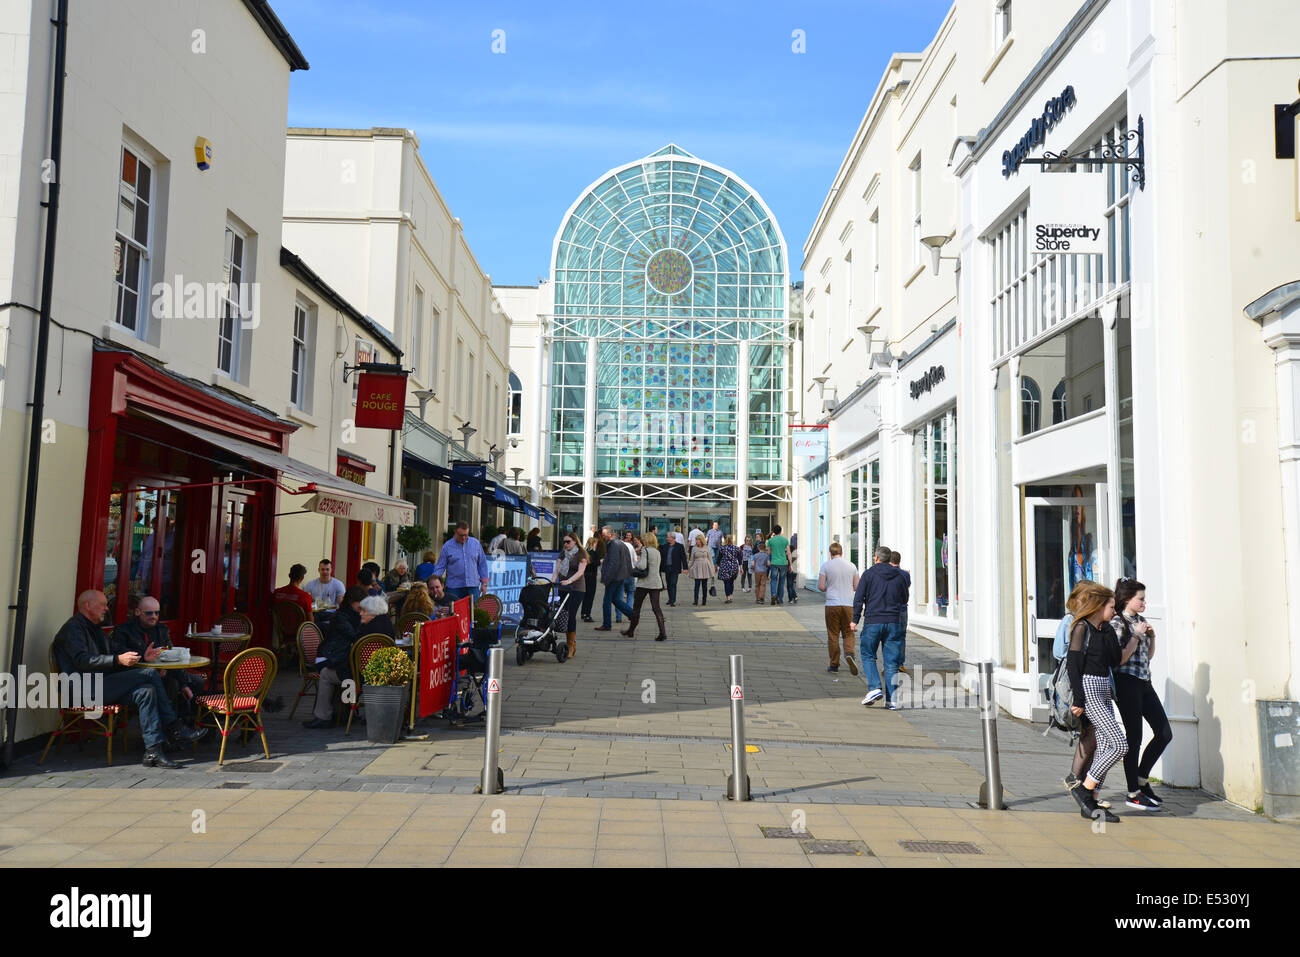 The Royal Priors Shopping Centre, Royal Leamington Spa, Warwickshire, England, United Kingdom Stock Photo